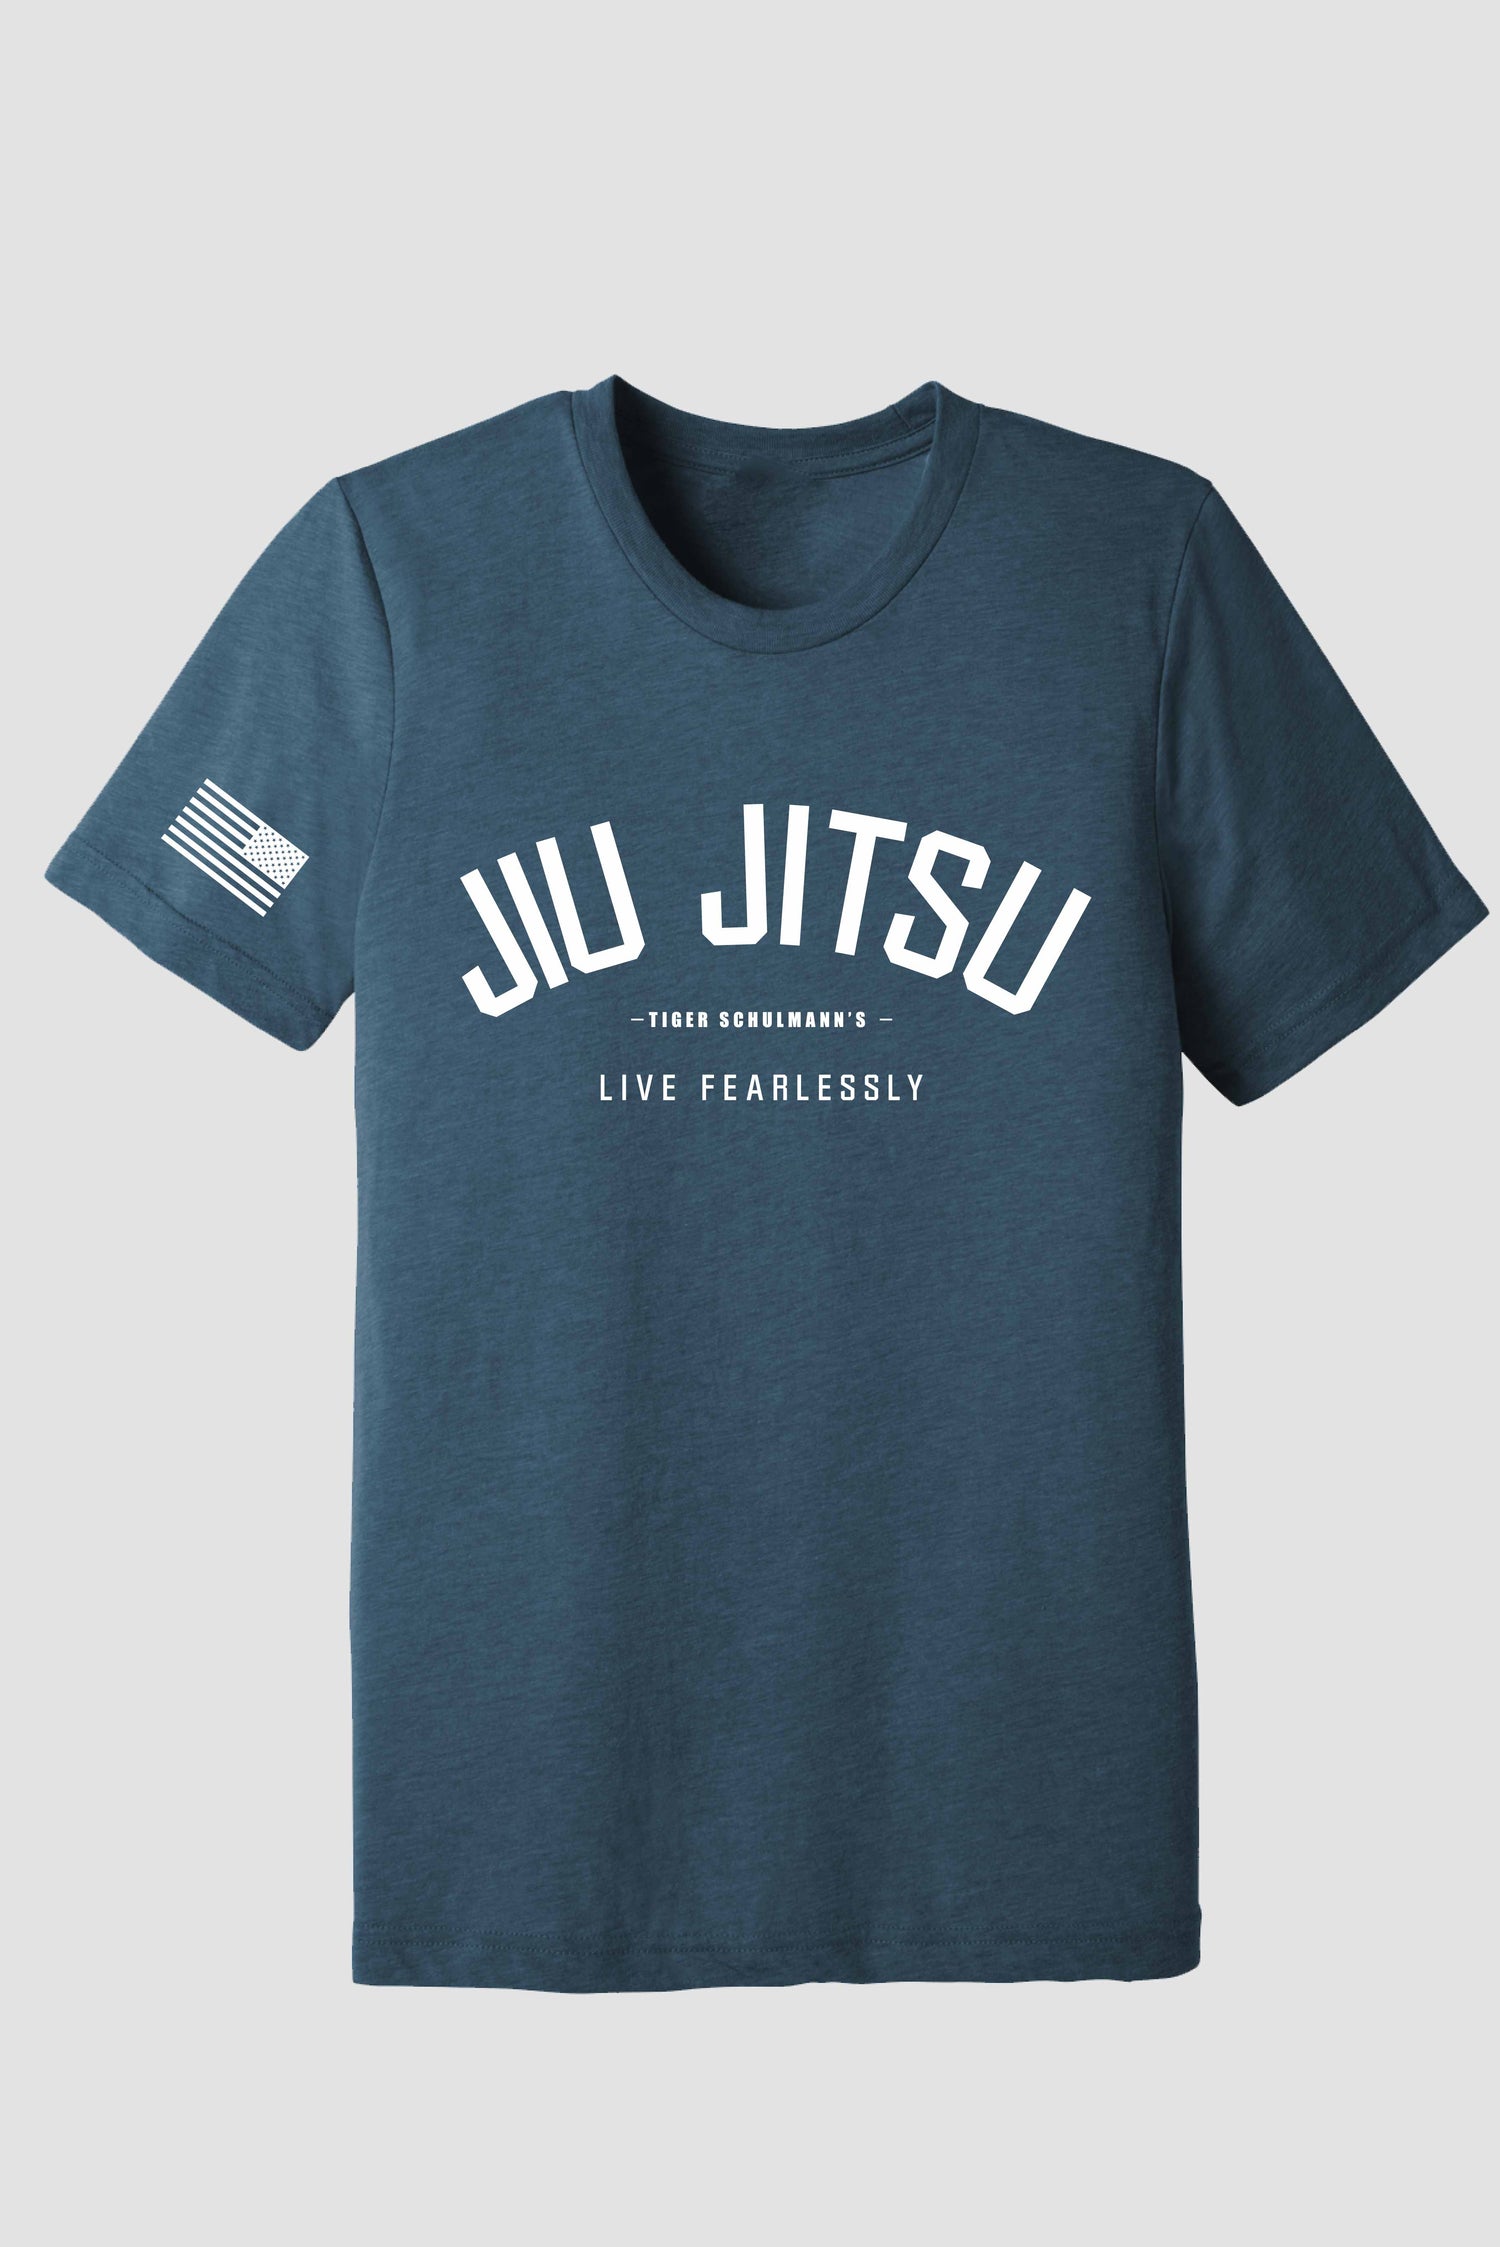 Jiu-Jitsu Tee Steel Blue